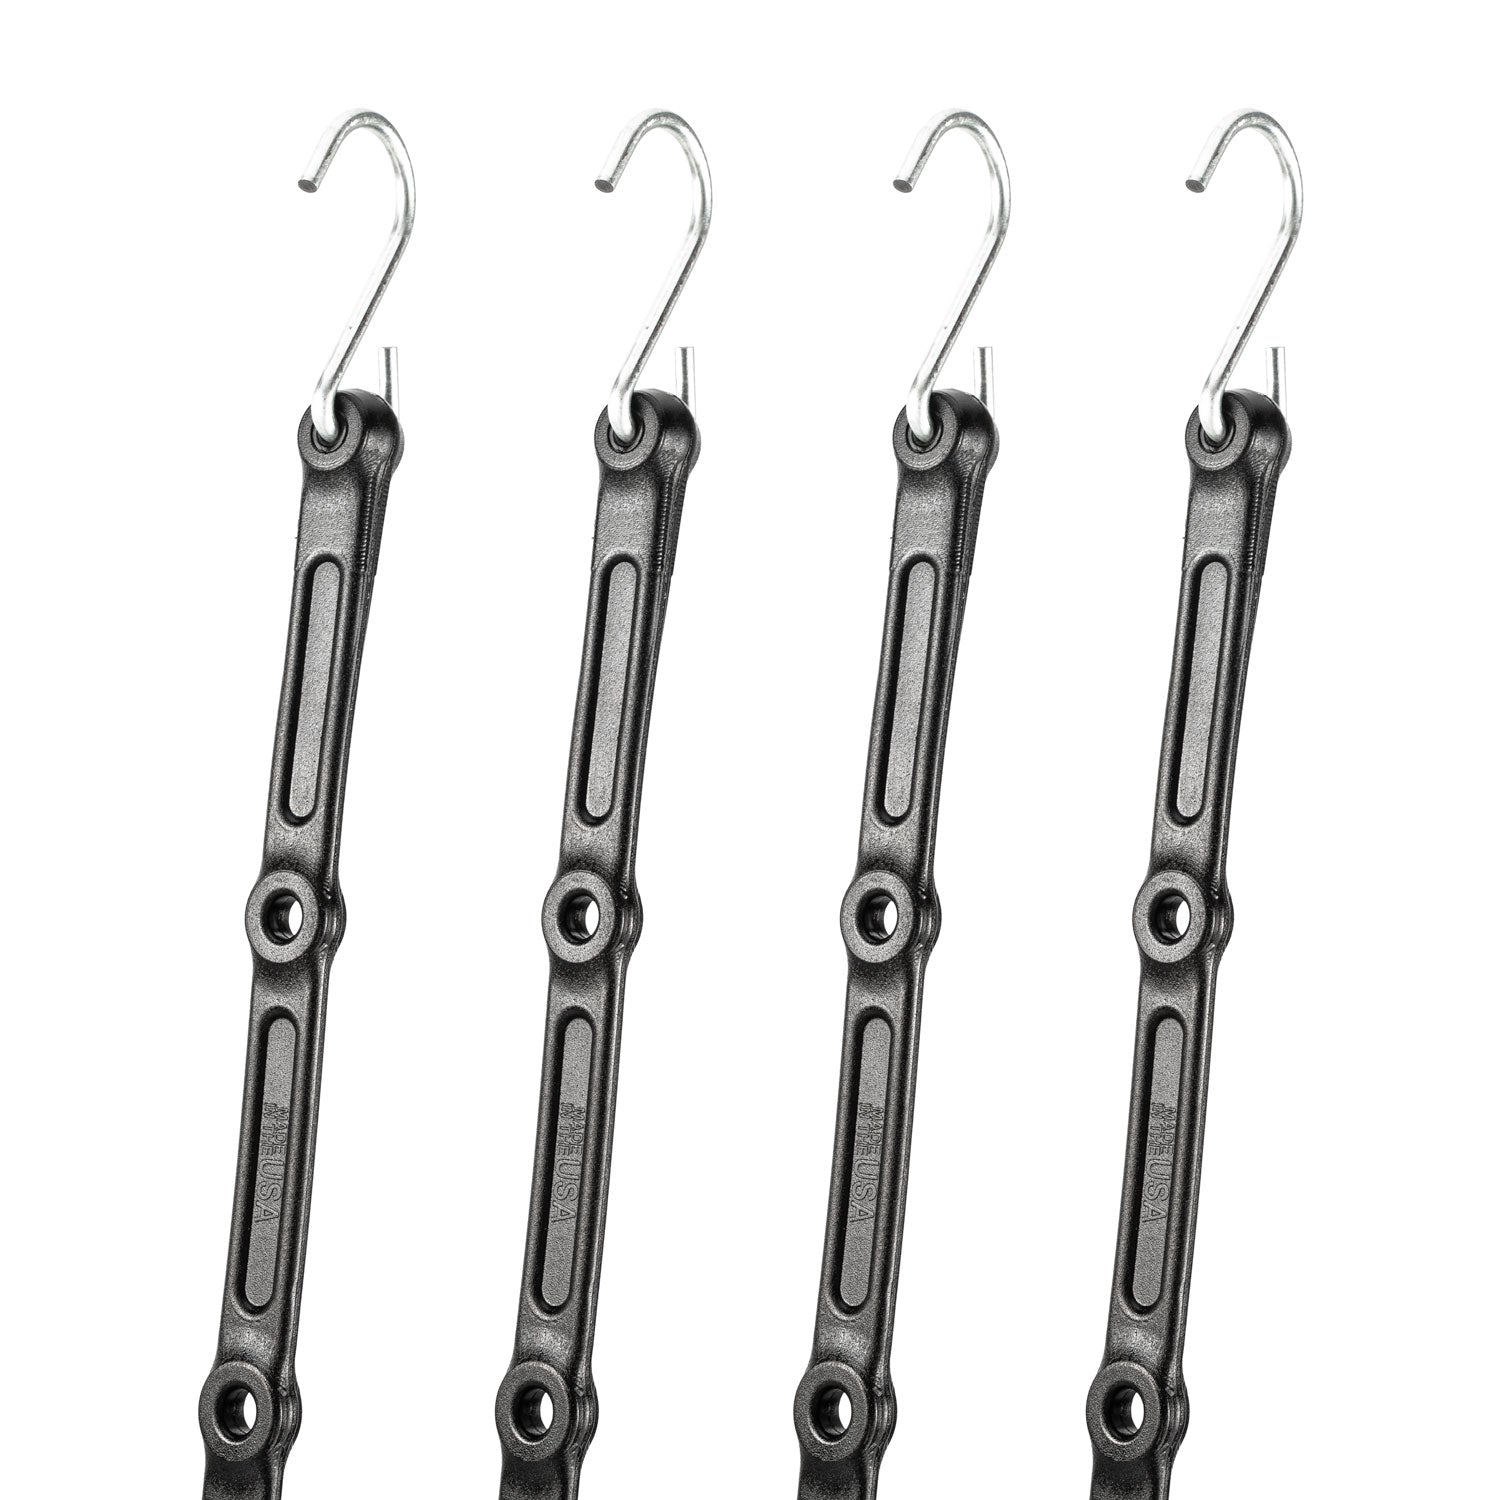 48 Adjust-A-Strap Adjustable Bungee Strap 4 Pack, Galvanized Hooks